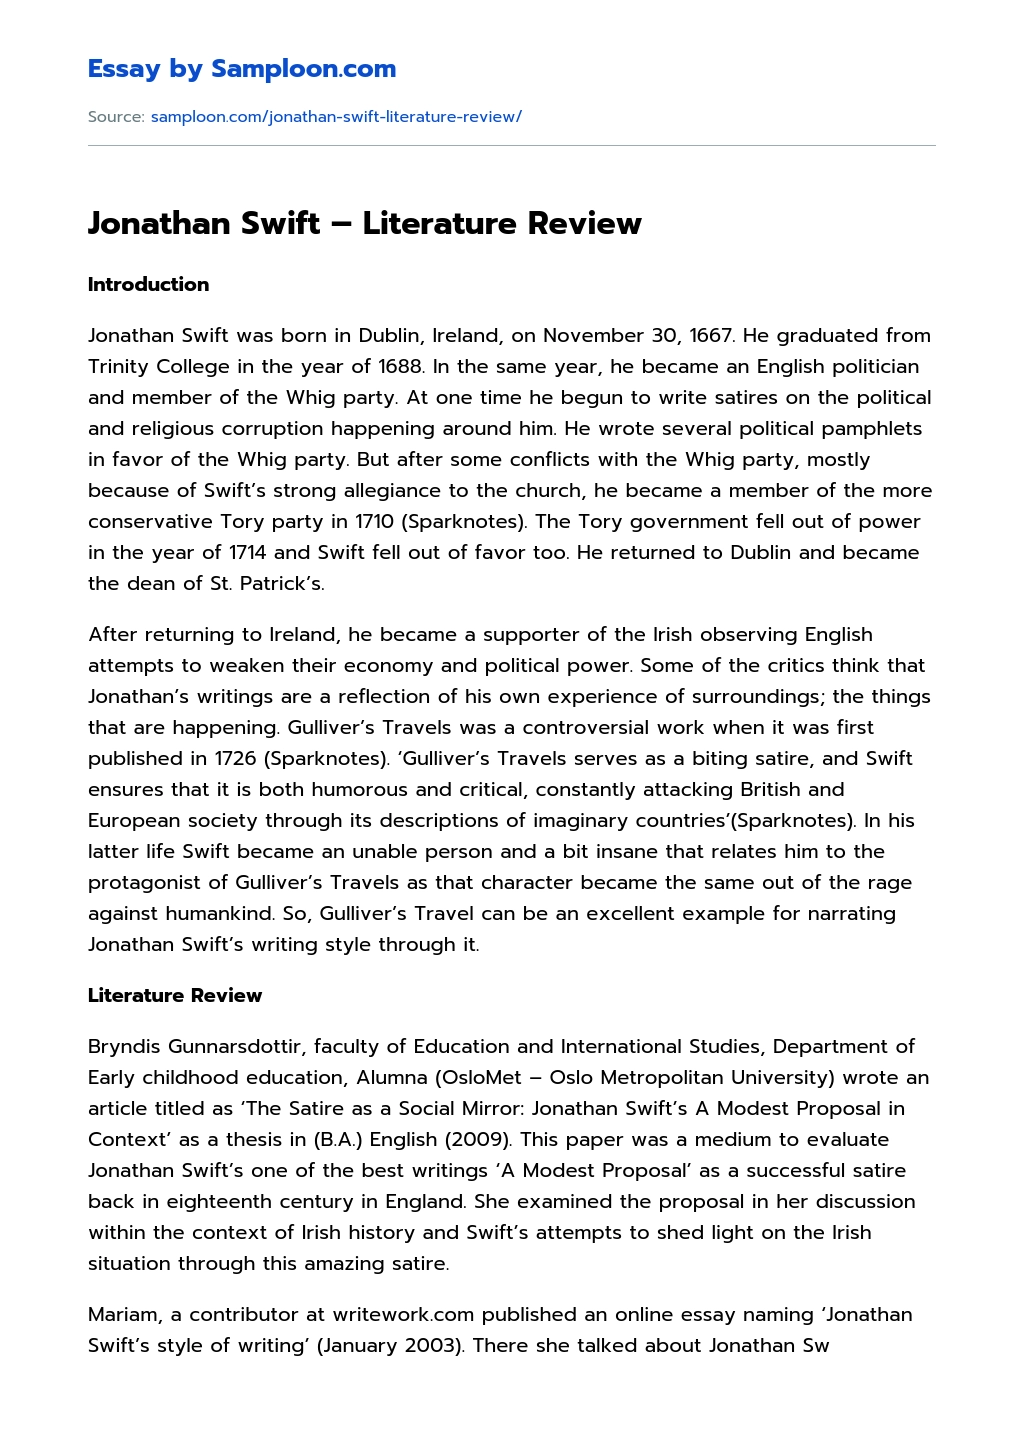 Jonathan Swift – Literature Review essay